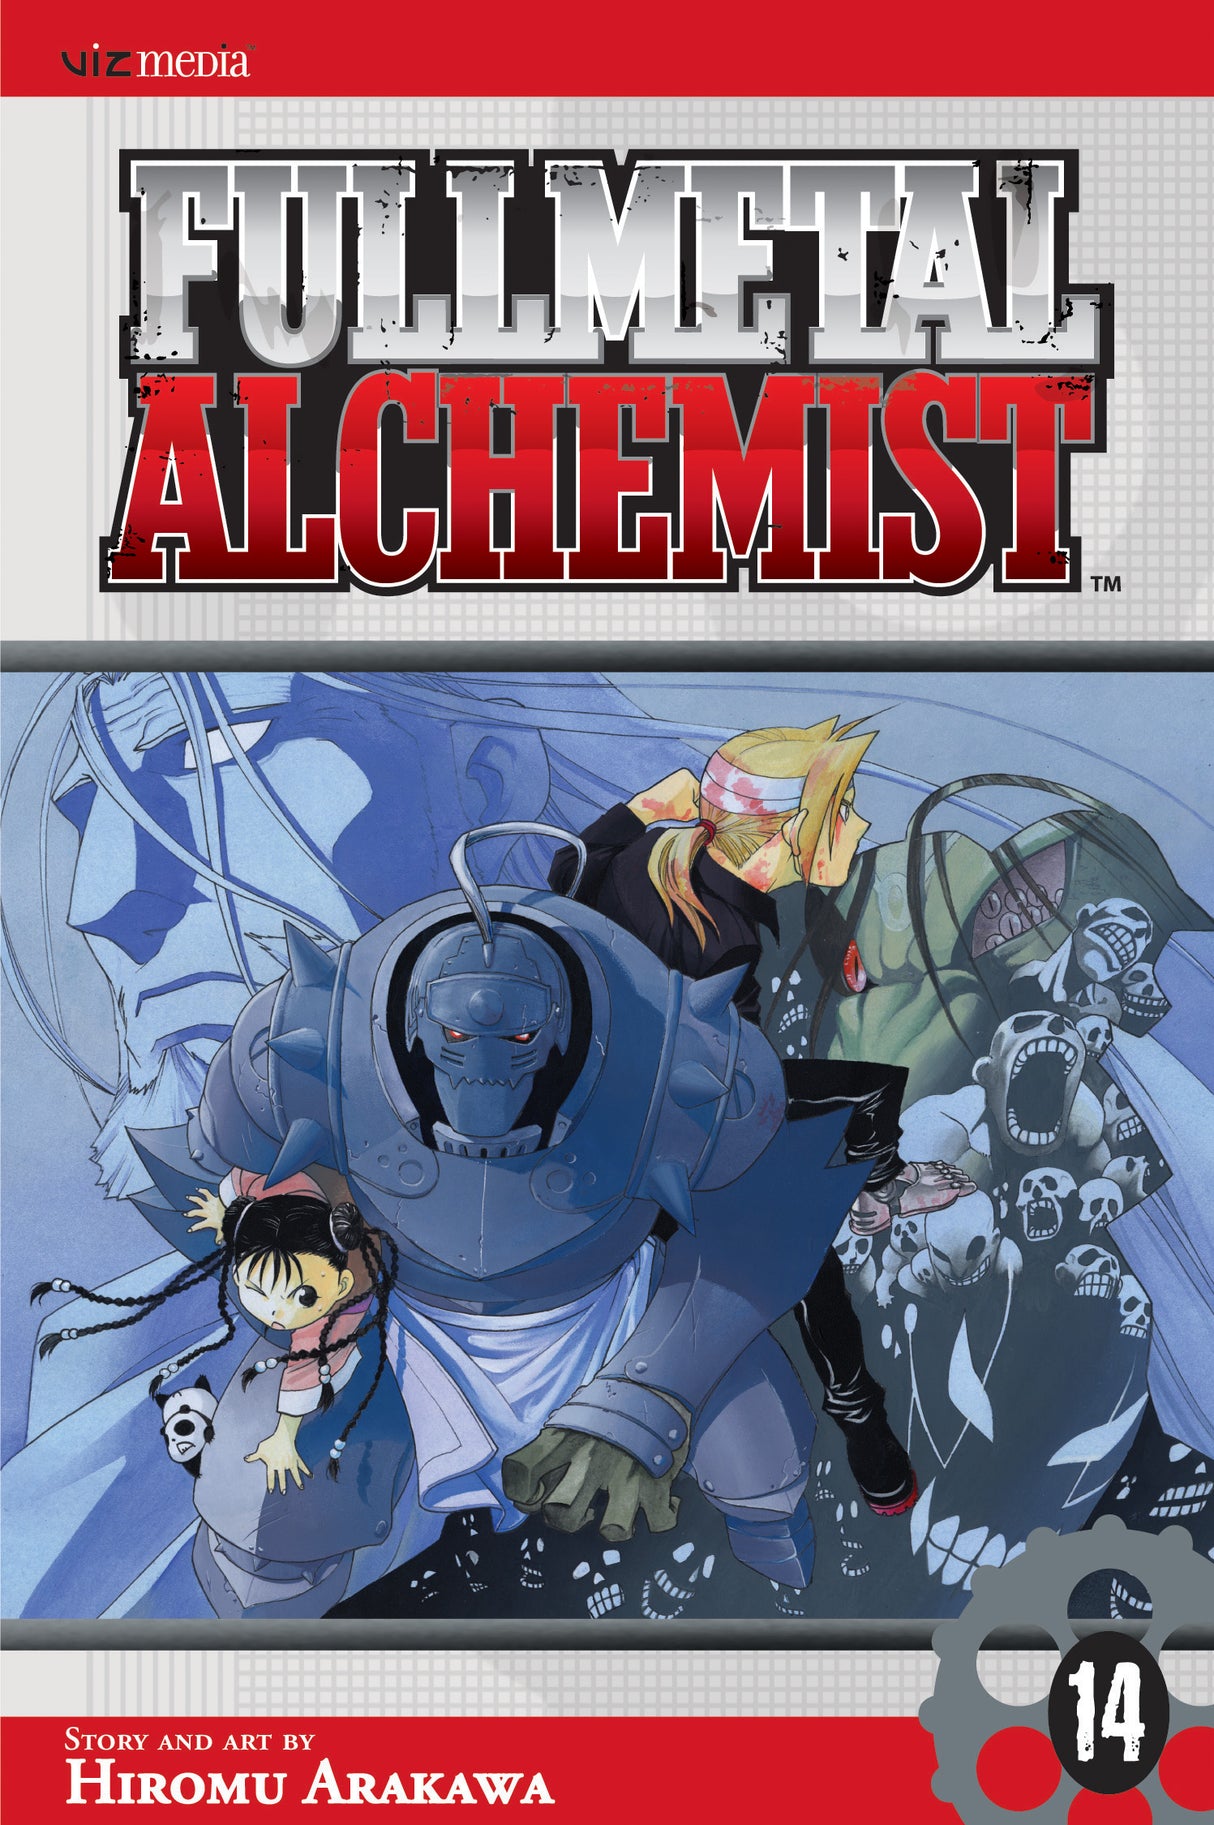 Cover image of the Manga Fullmetal Alchemist, Vol. 14